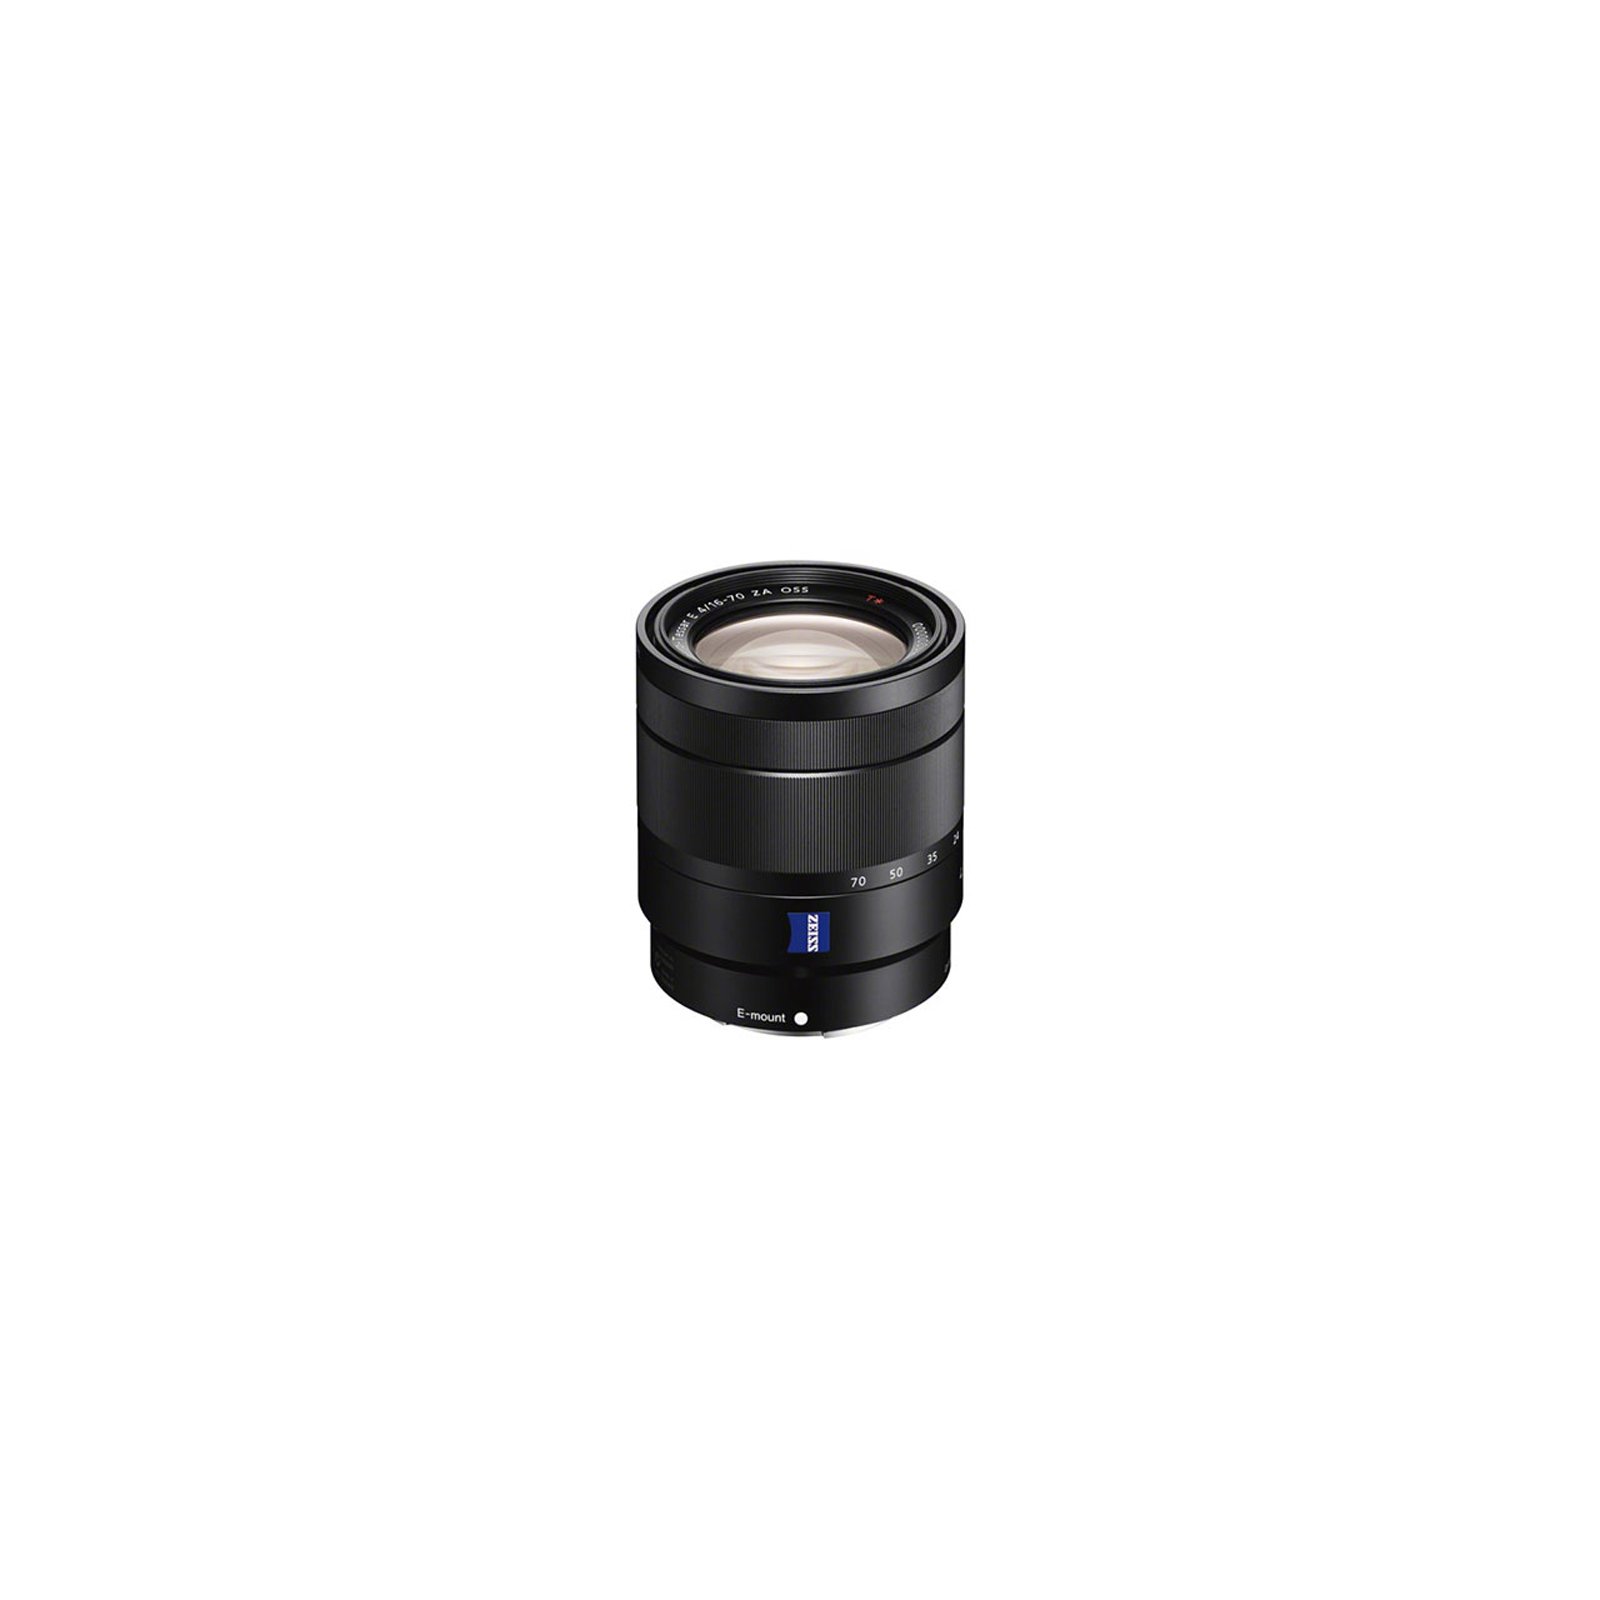 Об'єктив Sony 16-70mm f/4 OSS Carl Zeiss for NEX (SEL1670Z.AE)